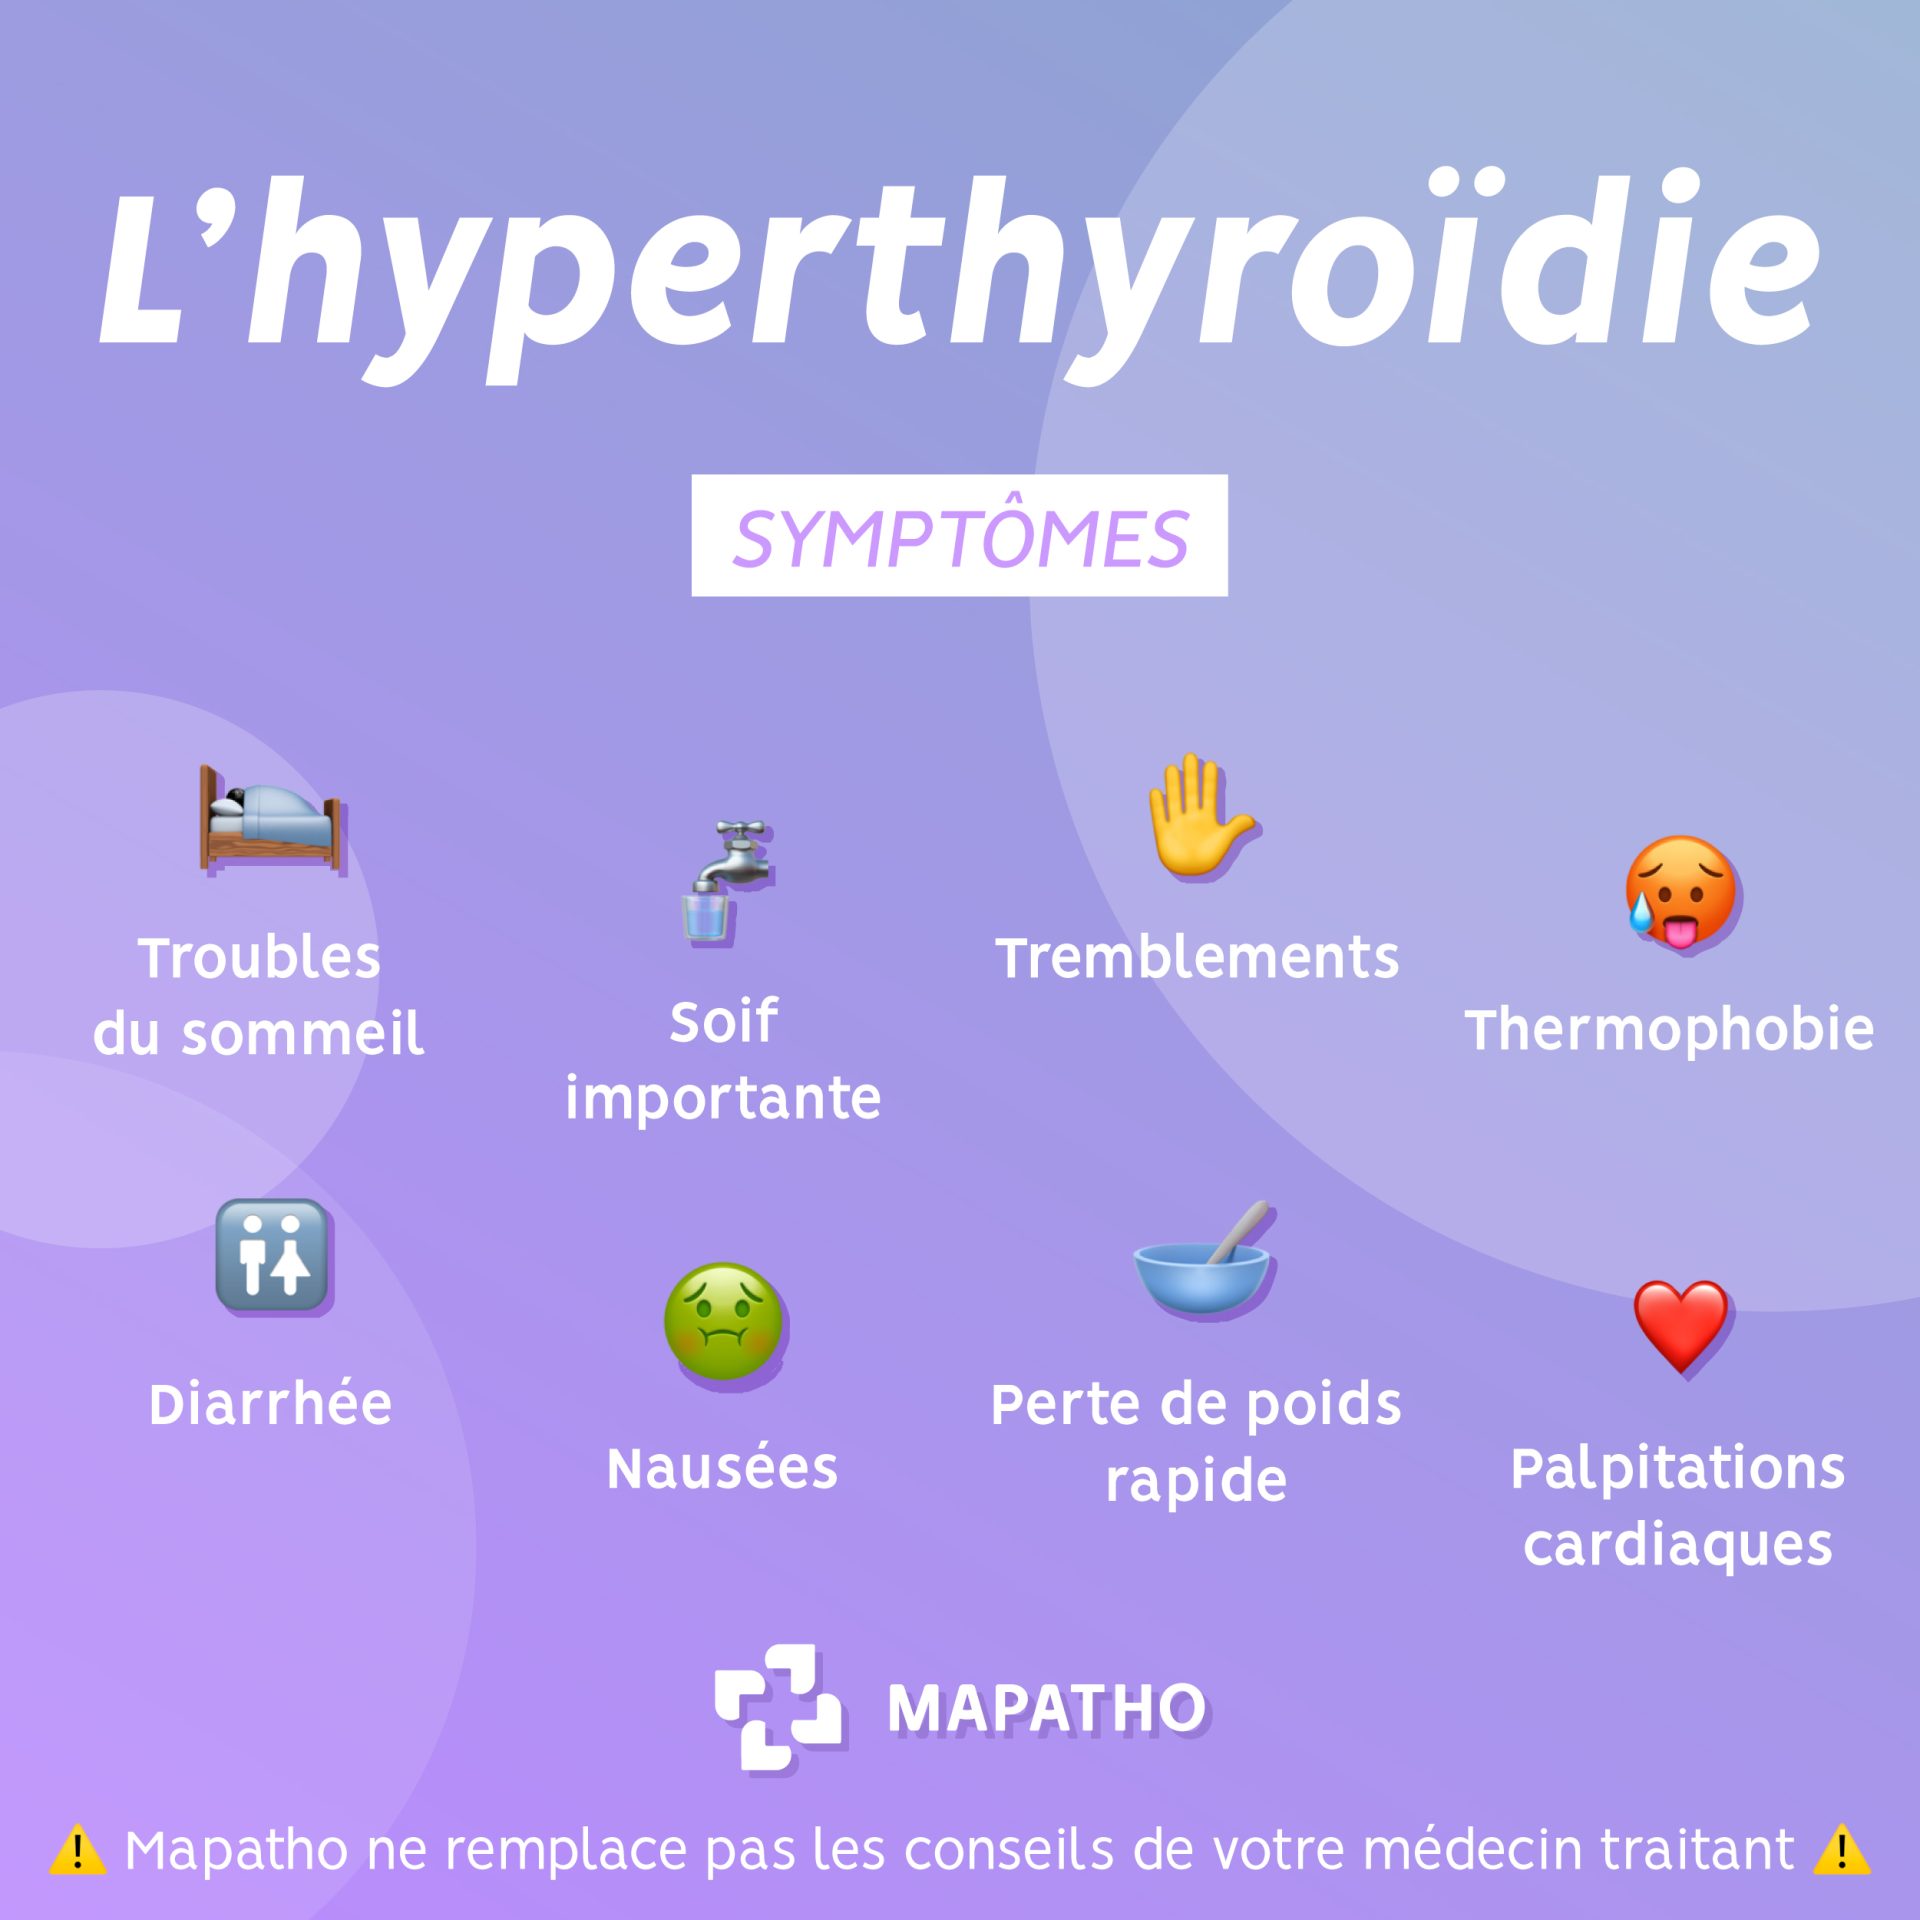 les symptomes de l'hyperthroidie